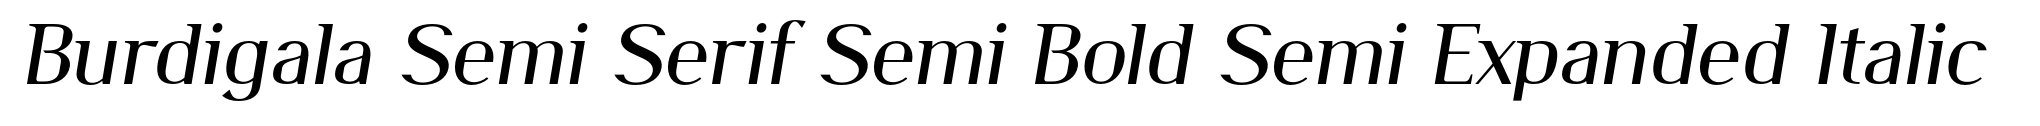 Burdigala Semi Serif Semi Bold Semi Expanded Italic image